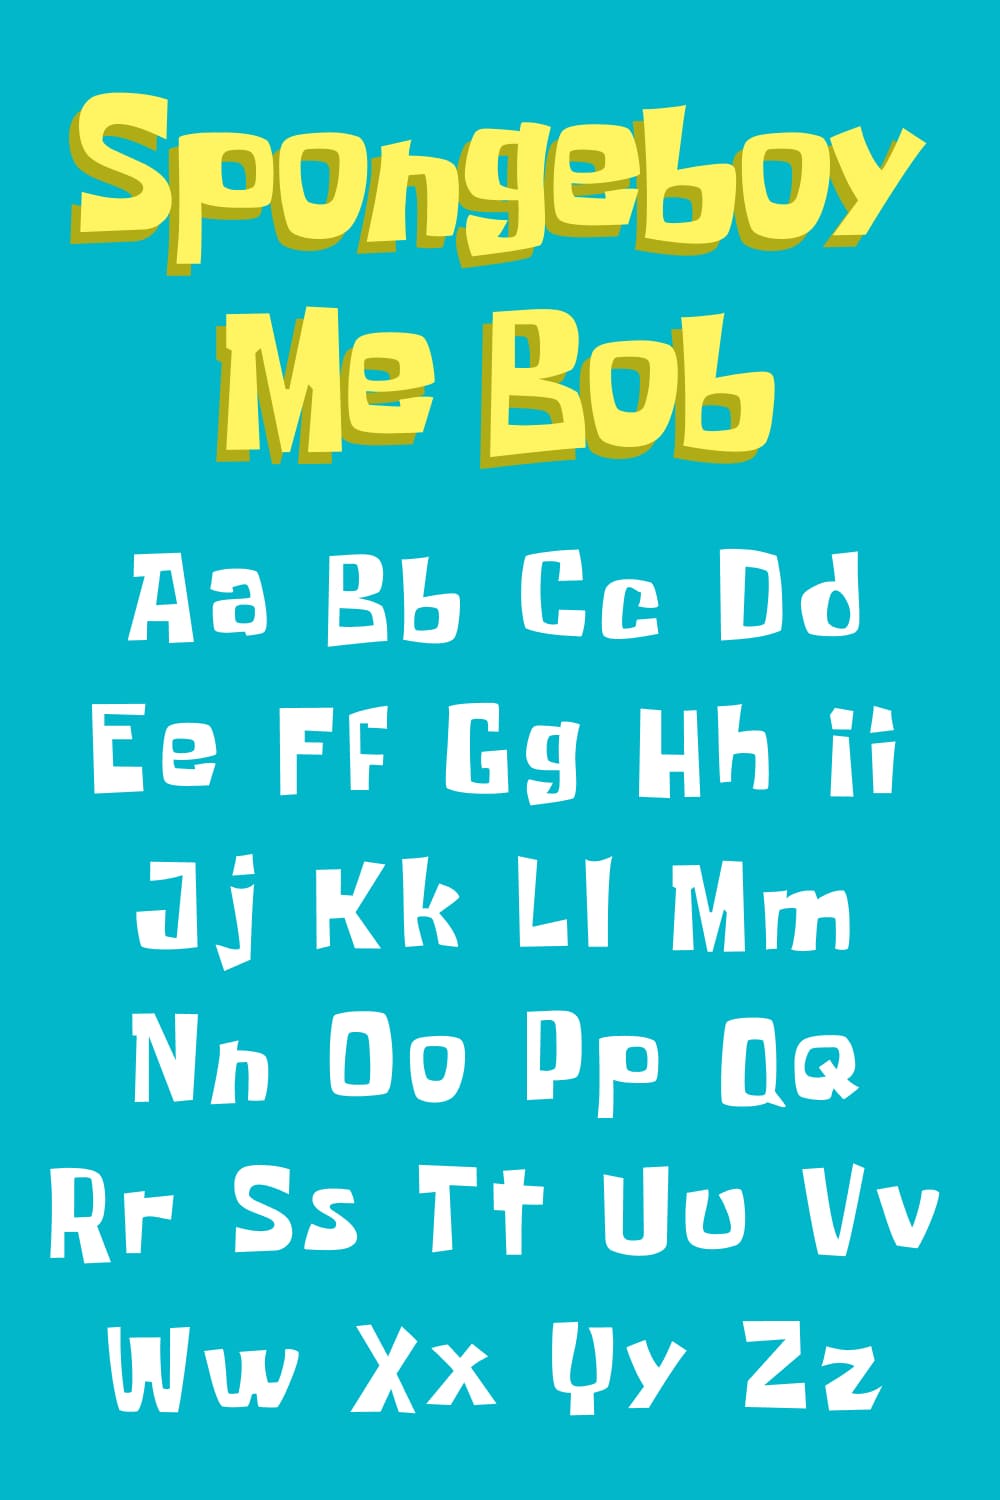 01 Spongeboy Me Bob Free spongebob font Pinterest.